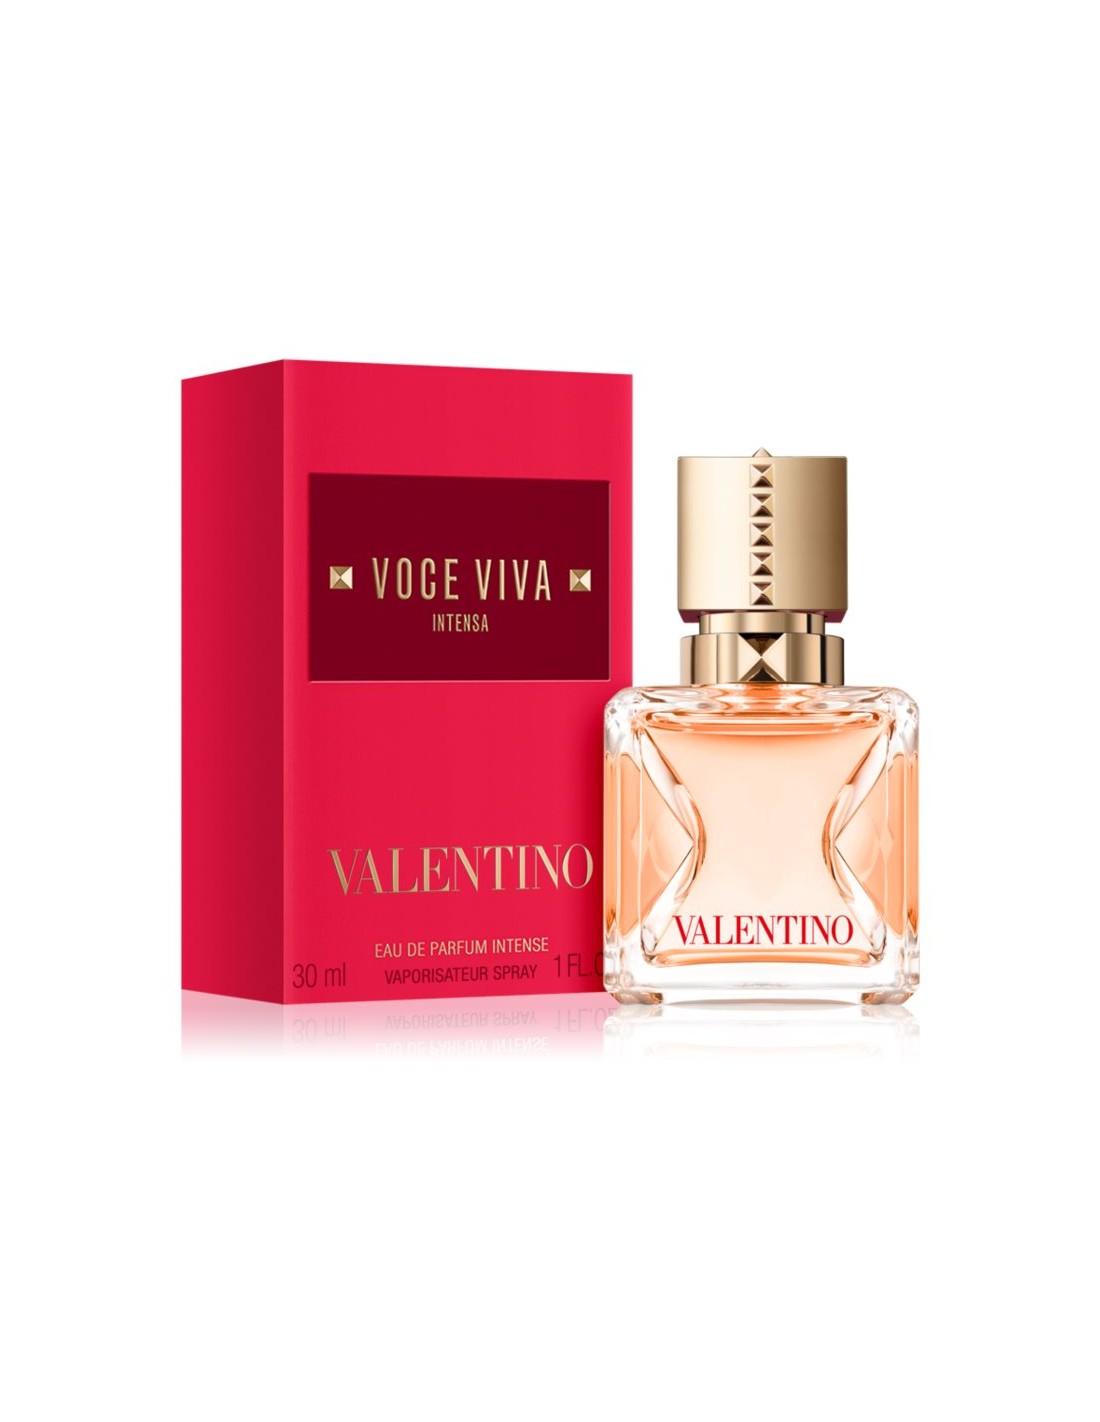 Image of Valentino Voce Viva Intensa - Eau de Parfum Intense - 30 ml